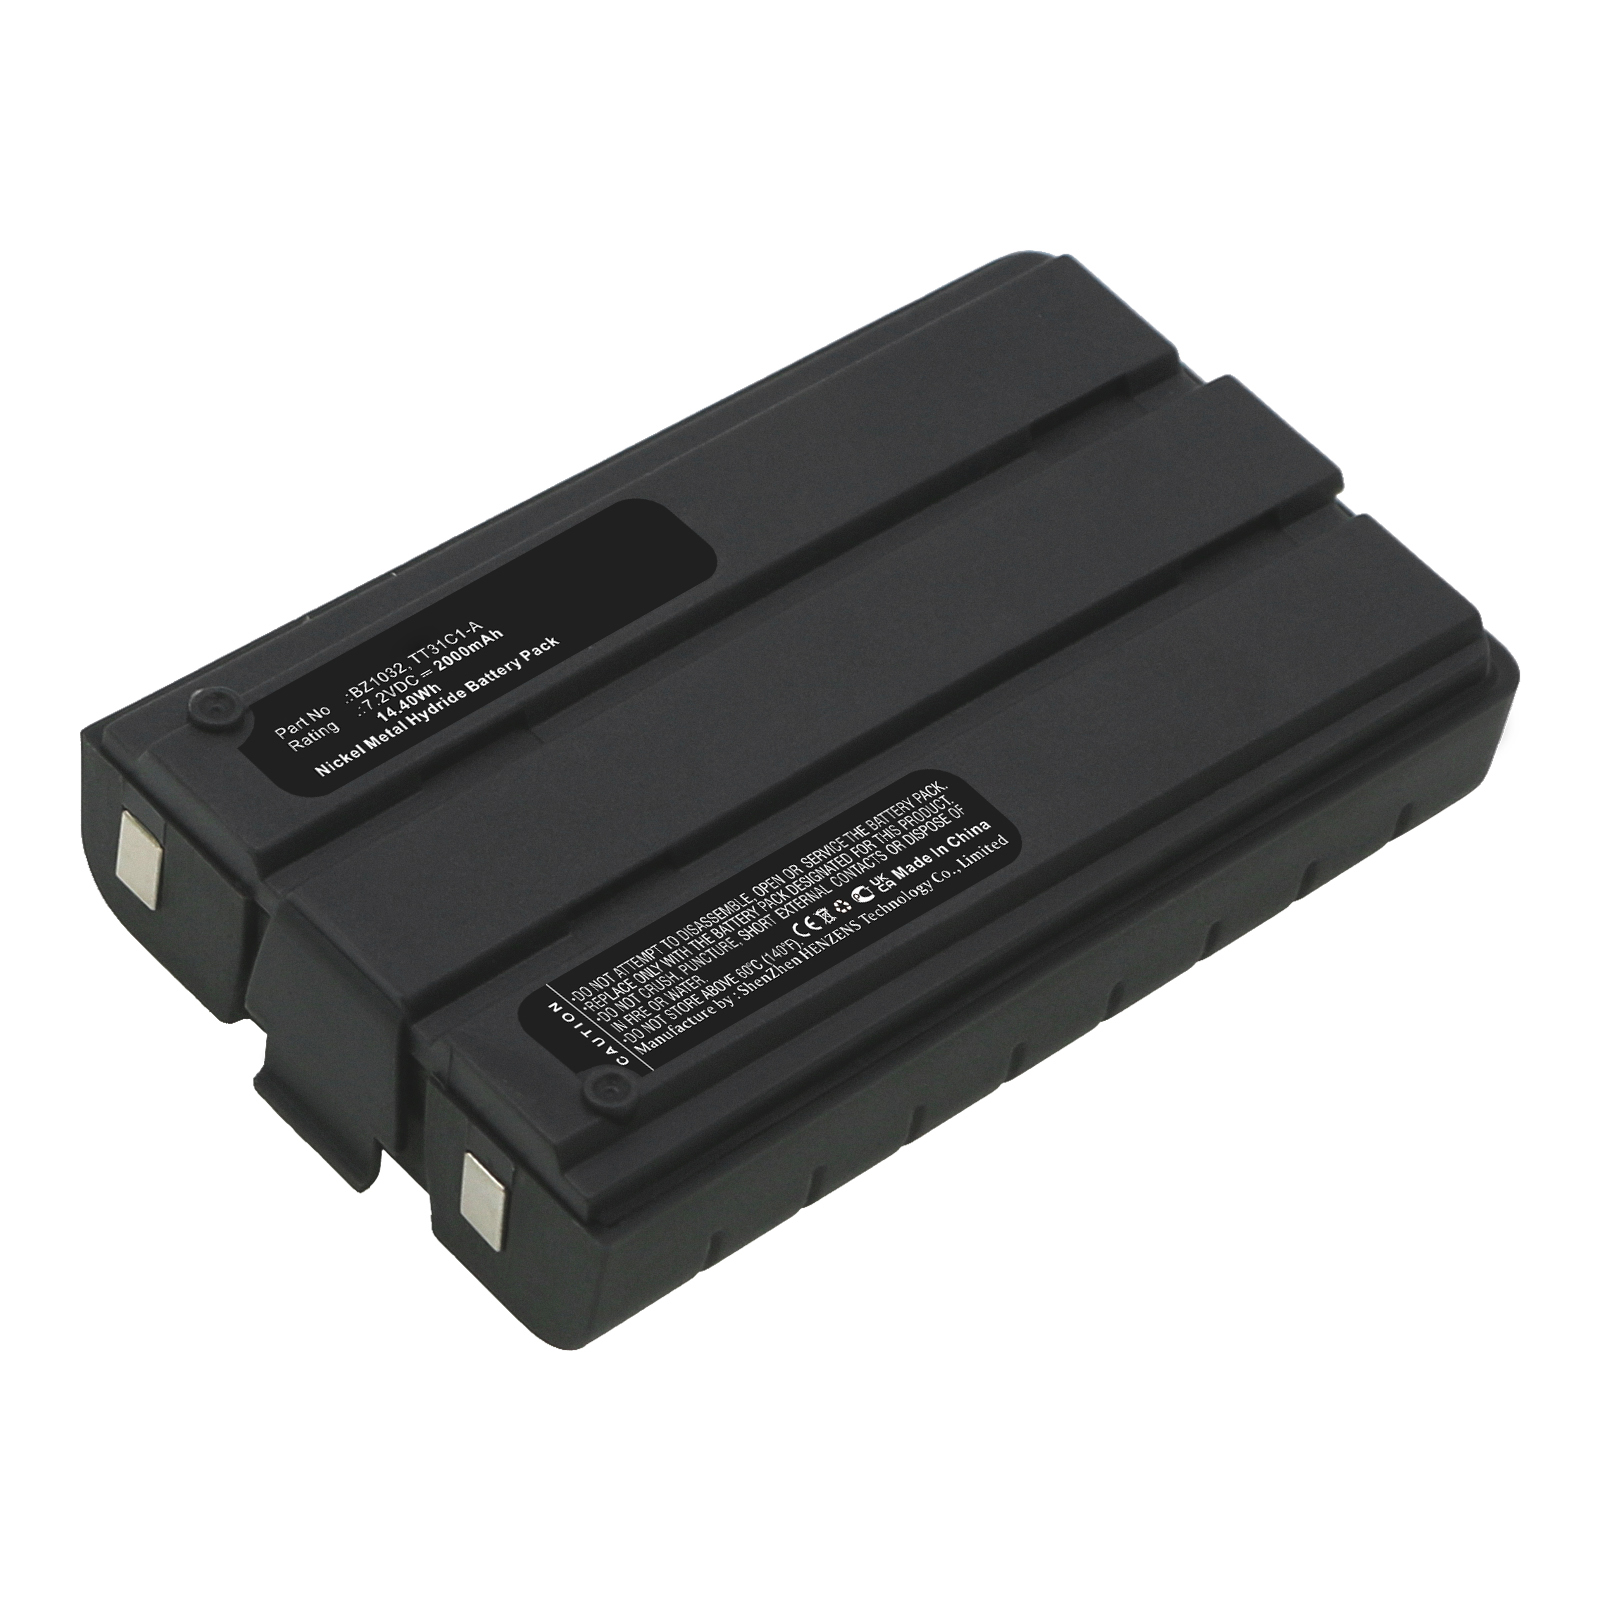 Synergy Digital 2-Way Radio Battery, Compatible with Tait BZ1032 2-Way Radio Battery (Ni-MH, 7.2V, 2000mAh)